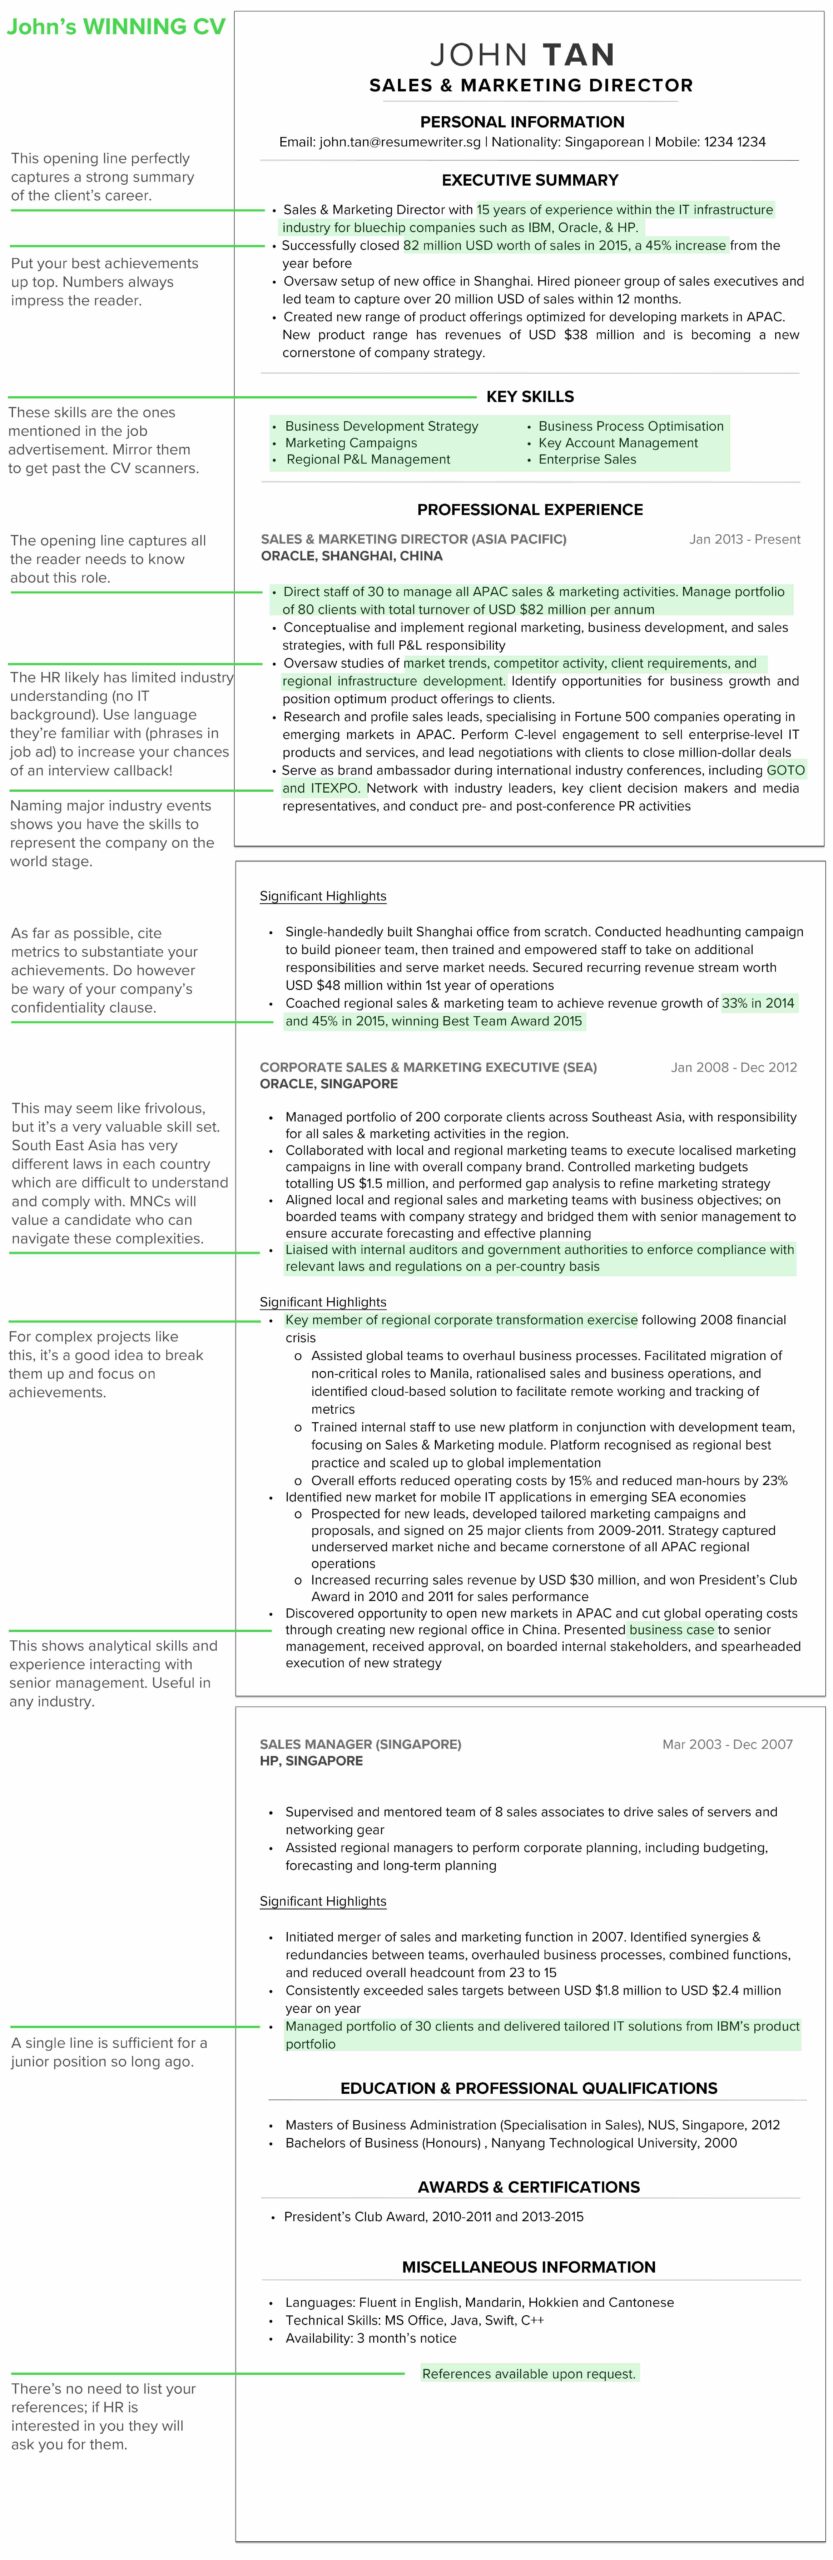 CV Annotated Winning CV Green Min Scaled